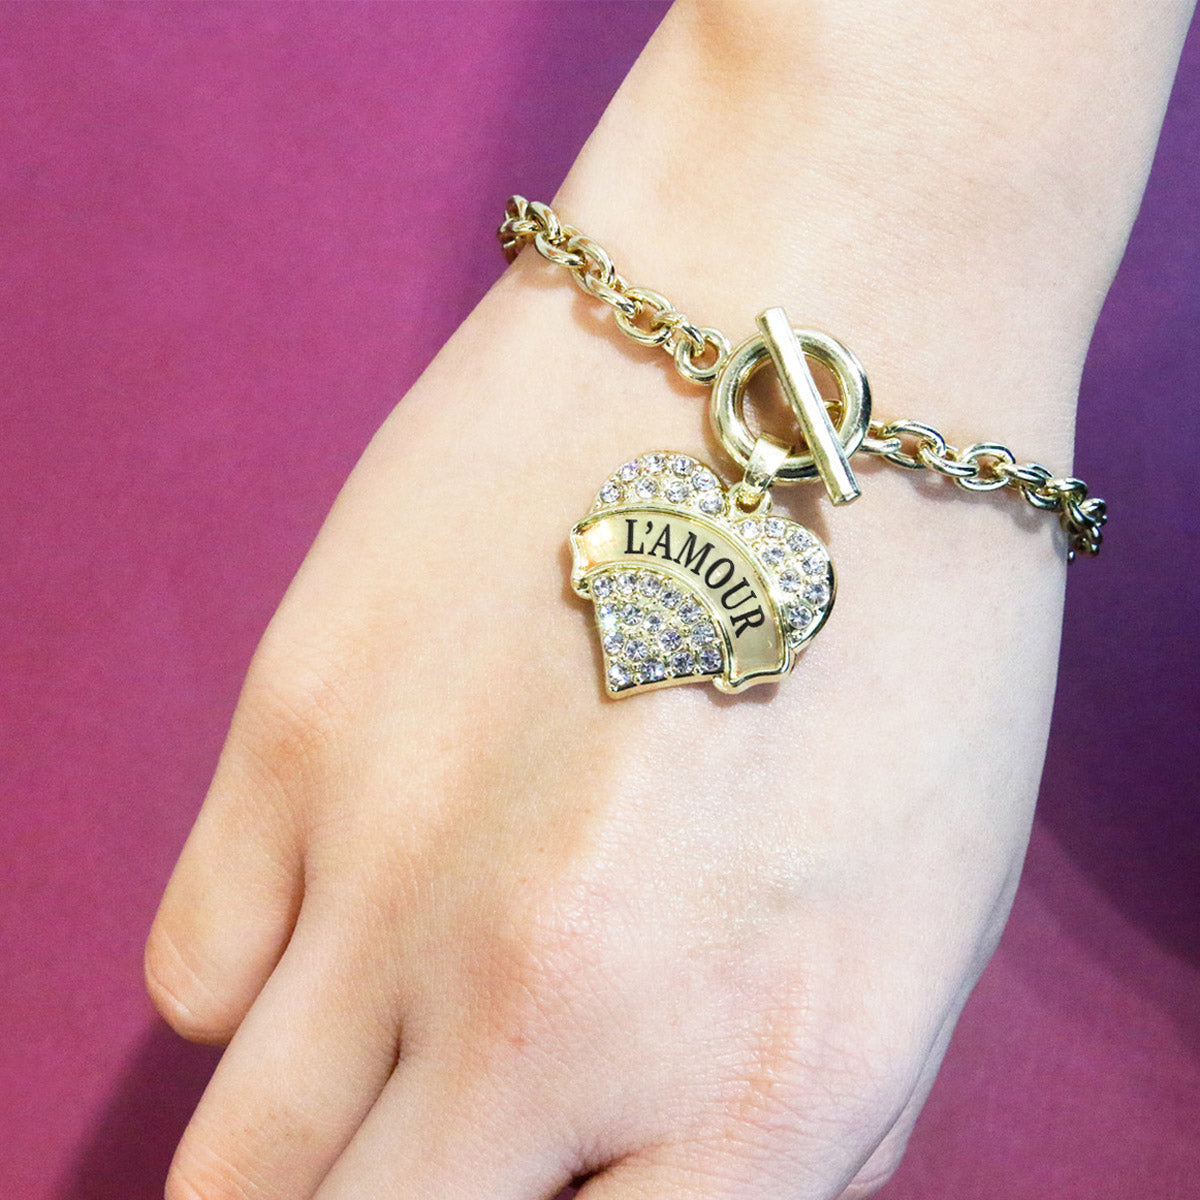 Gold L'amour Pave Heart Charm Toggle Bracelet